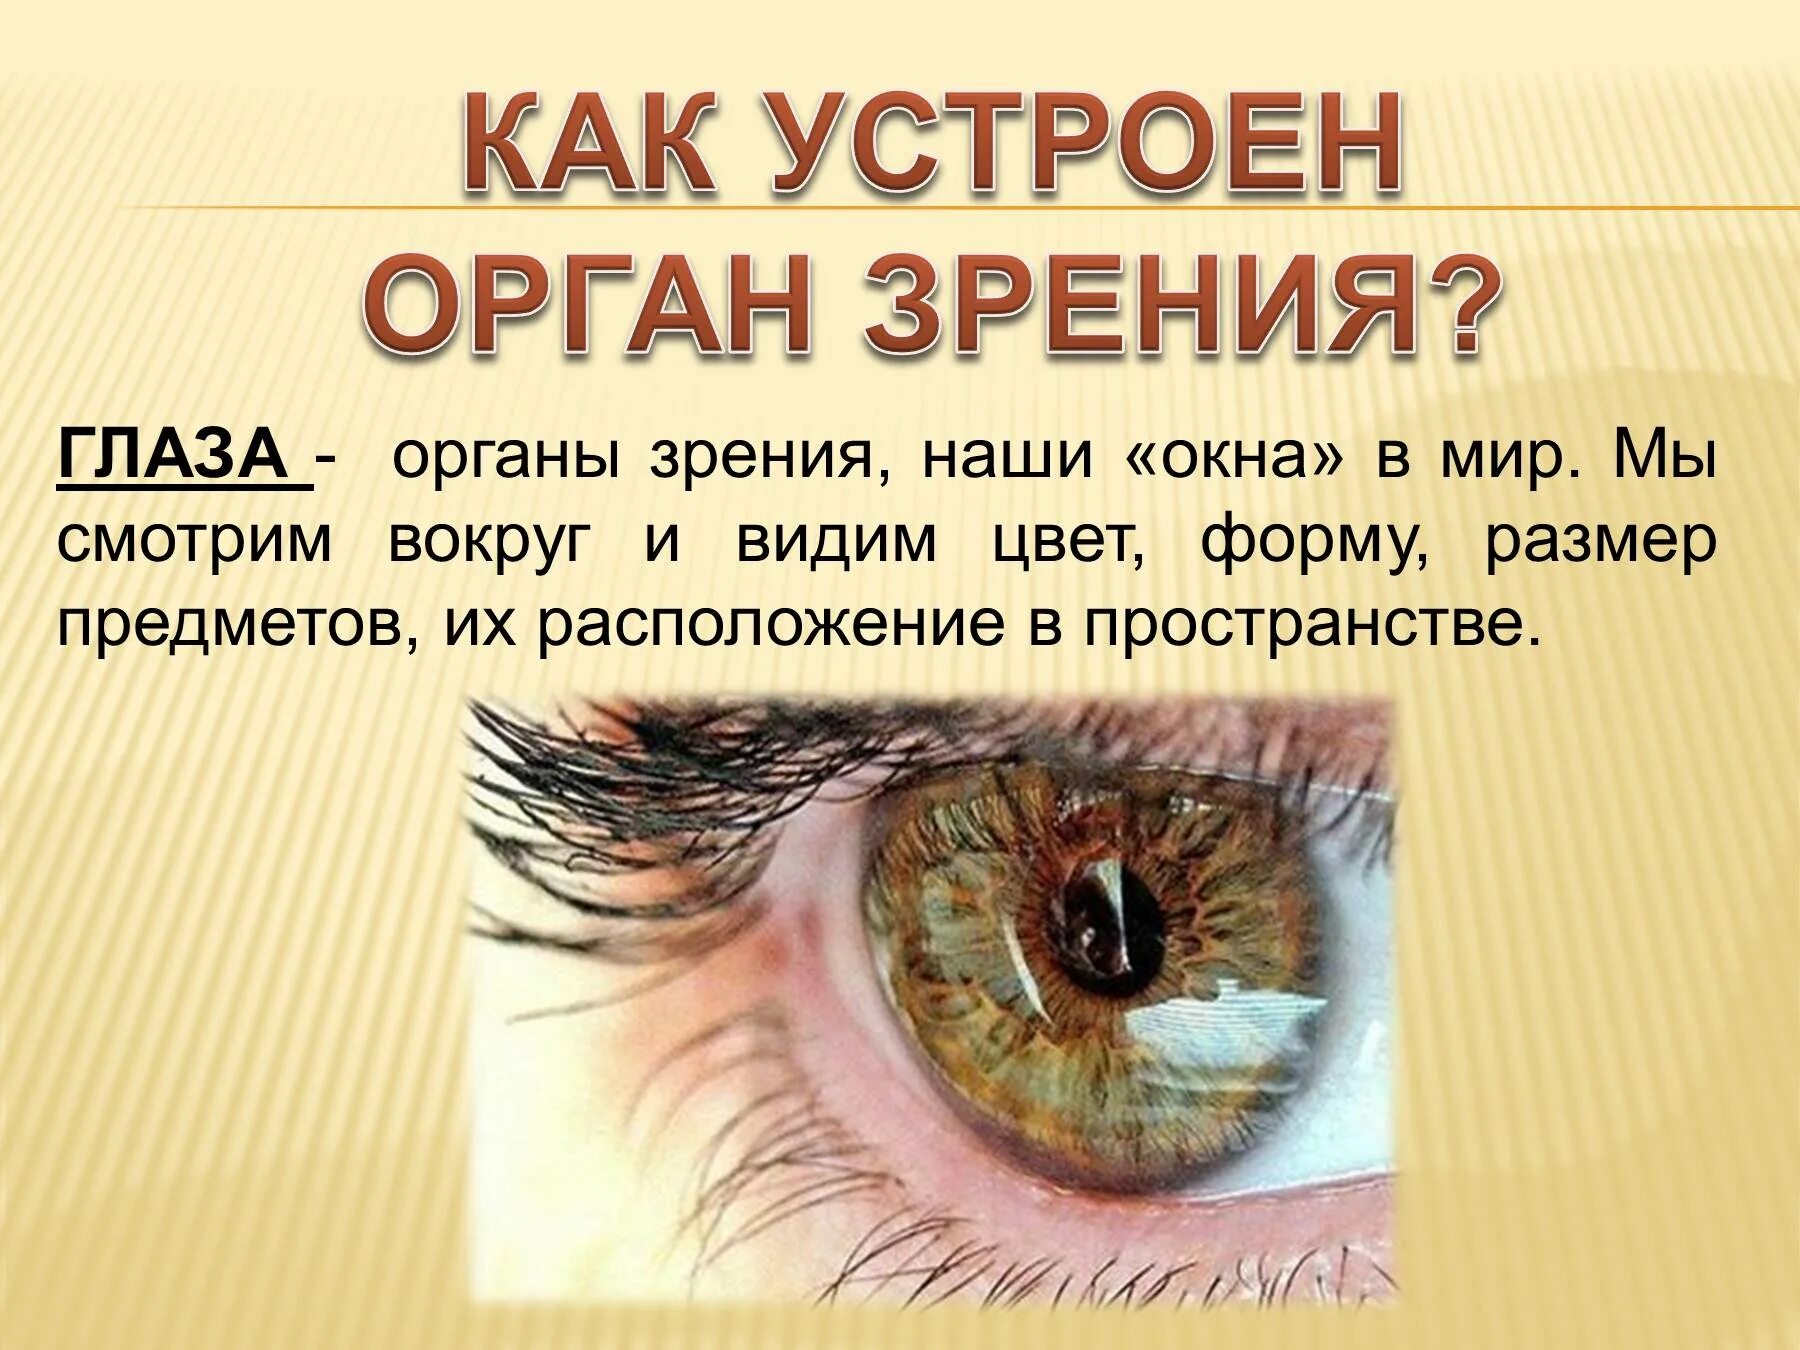 Орган зрения презентация. Презентация на тему зрение человека. Презентация на тему органы зрения. Органы чувств глаза.